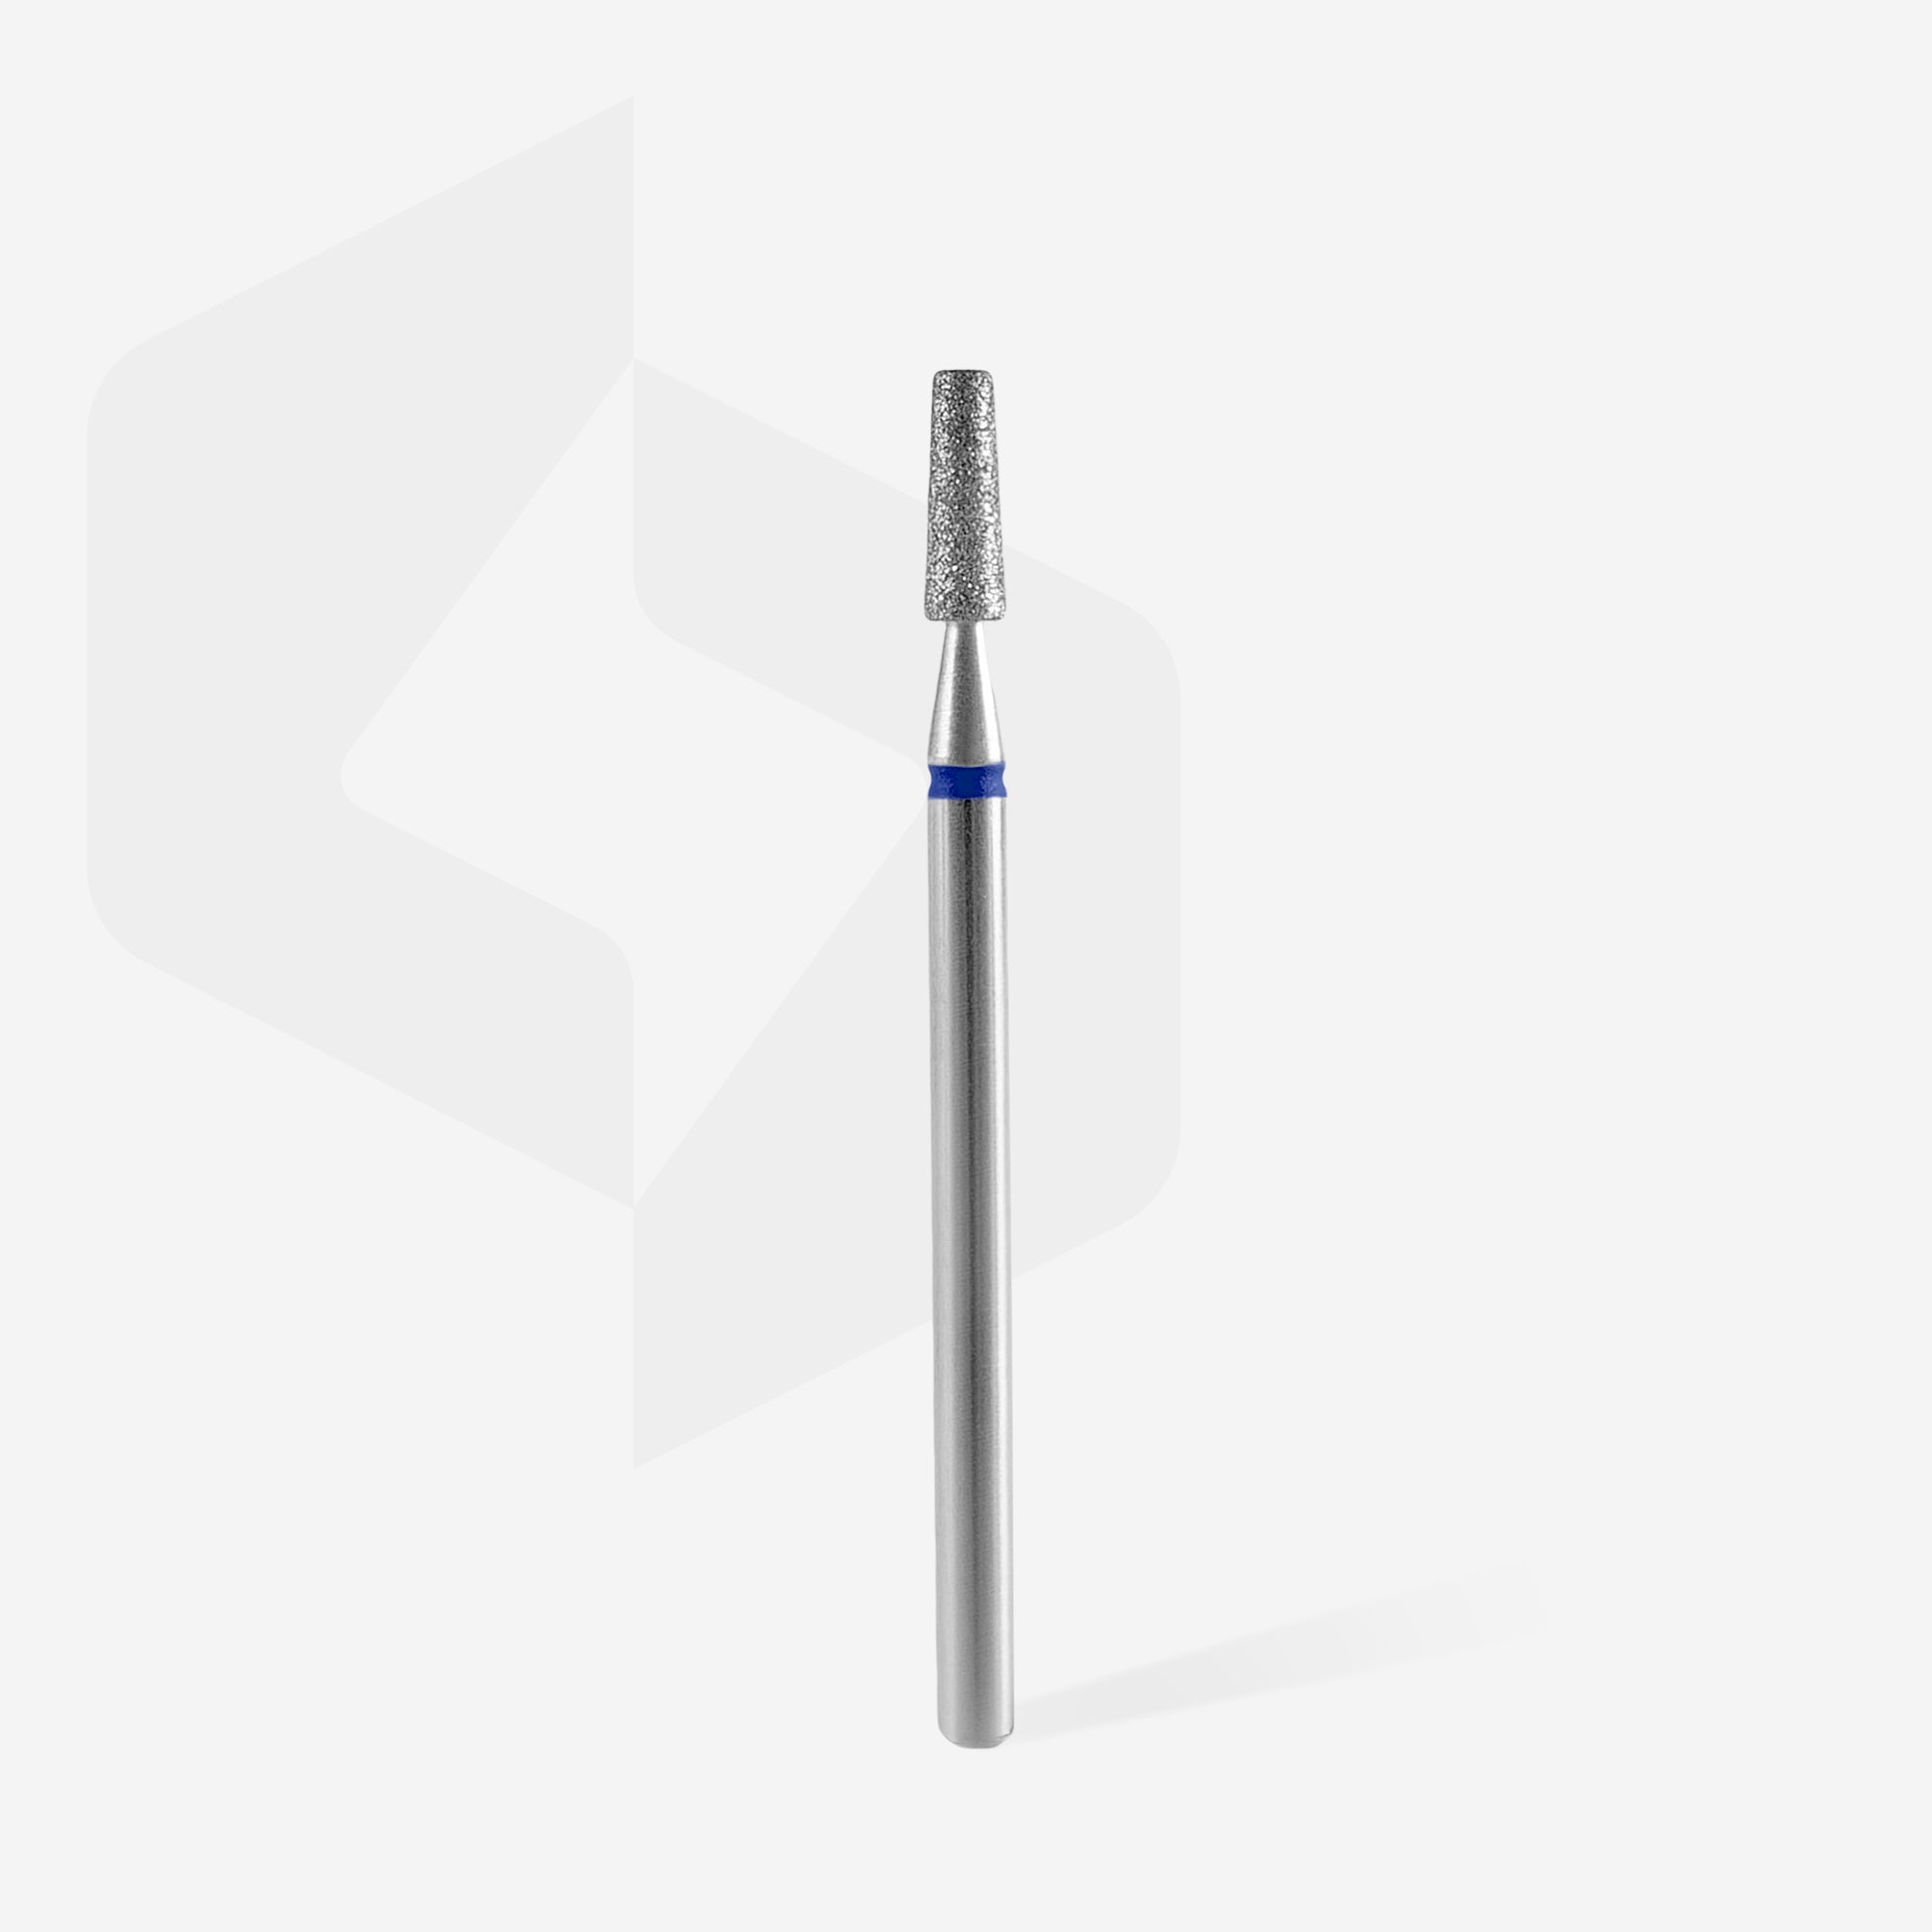 Diamond nail drill bit frustum blue EXPERT head diameter 2,5 mm / working part 8 mm